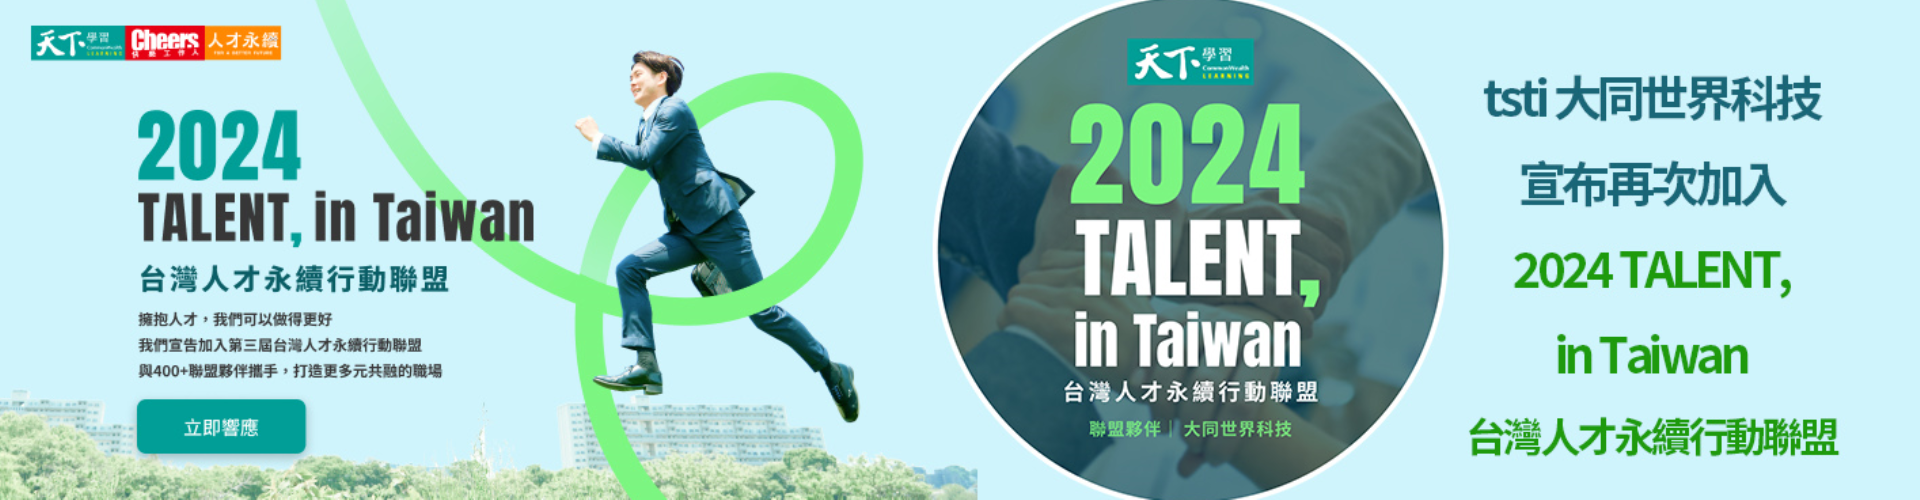 大世科-2024 TALENT,in Taiwan 